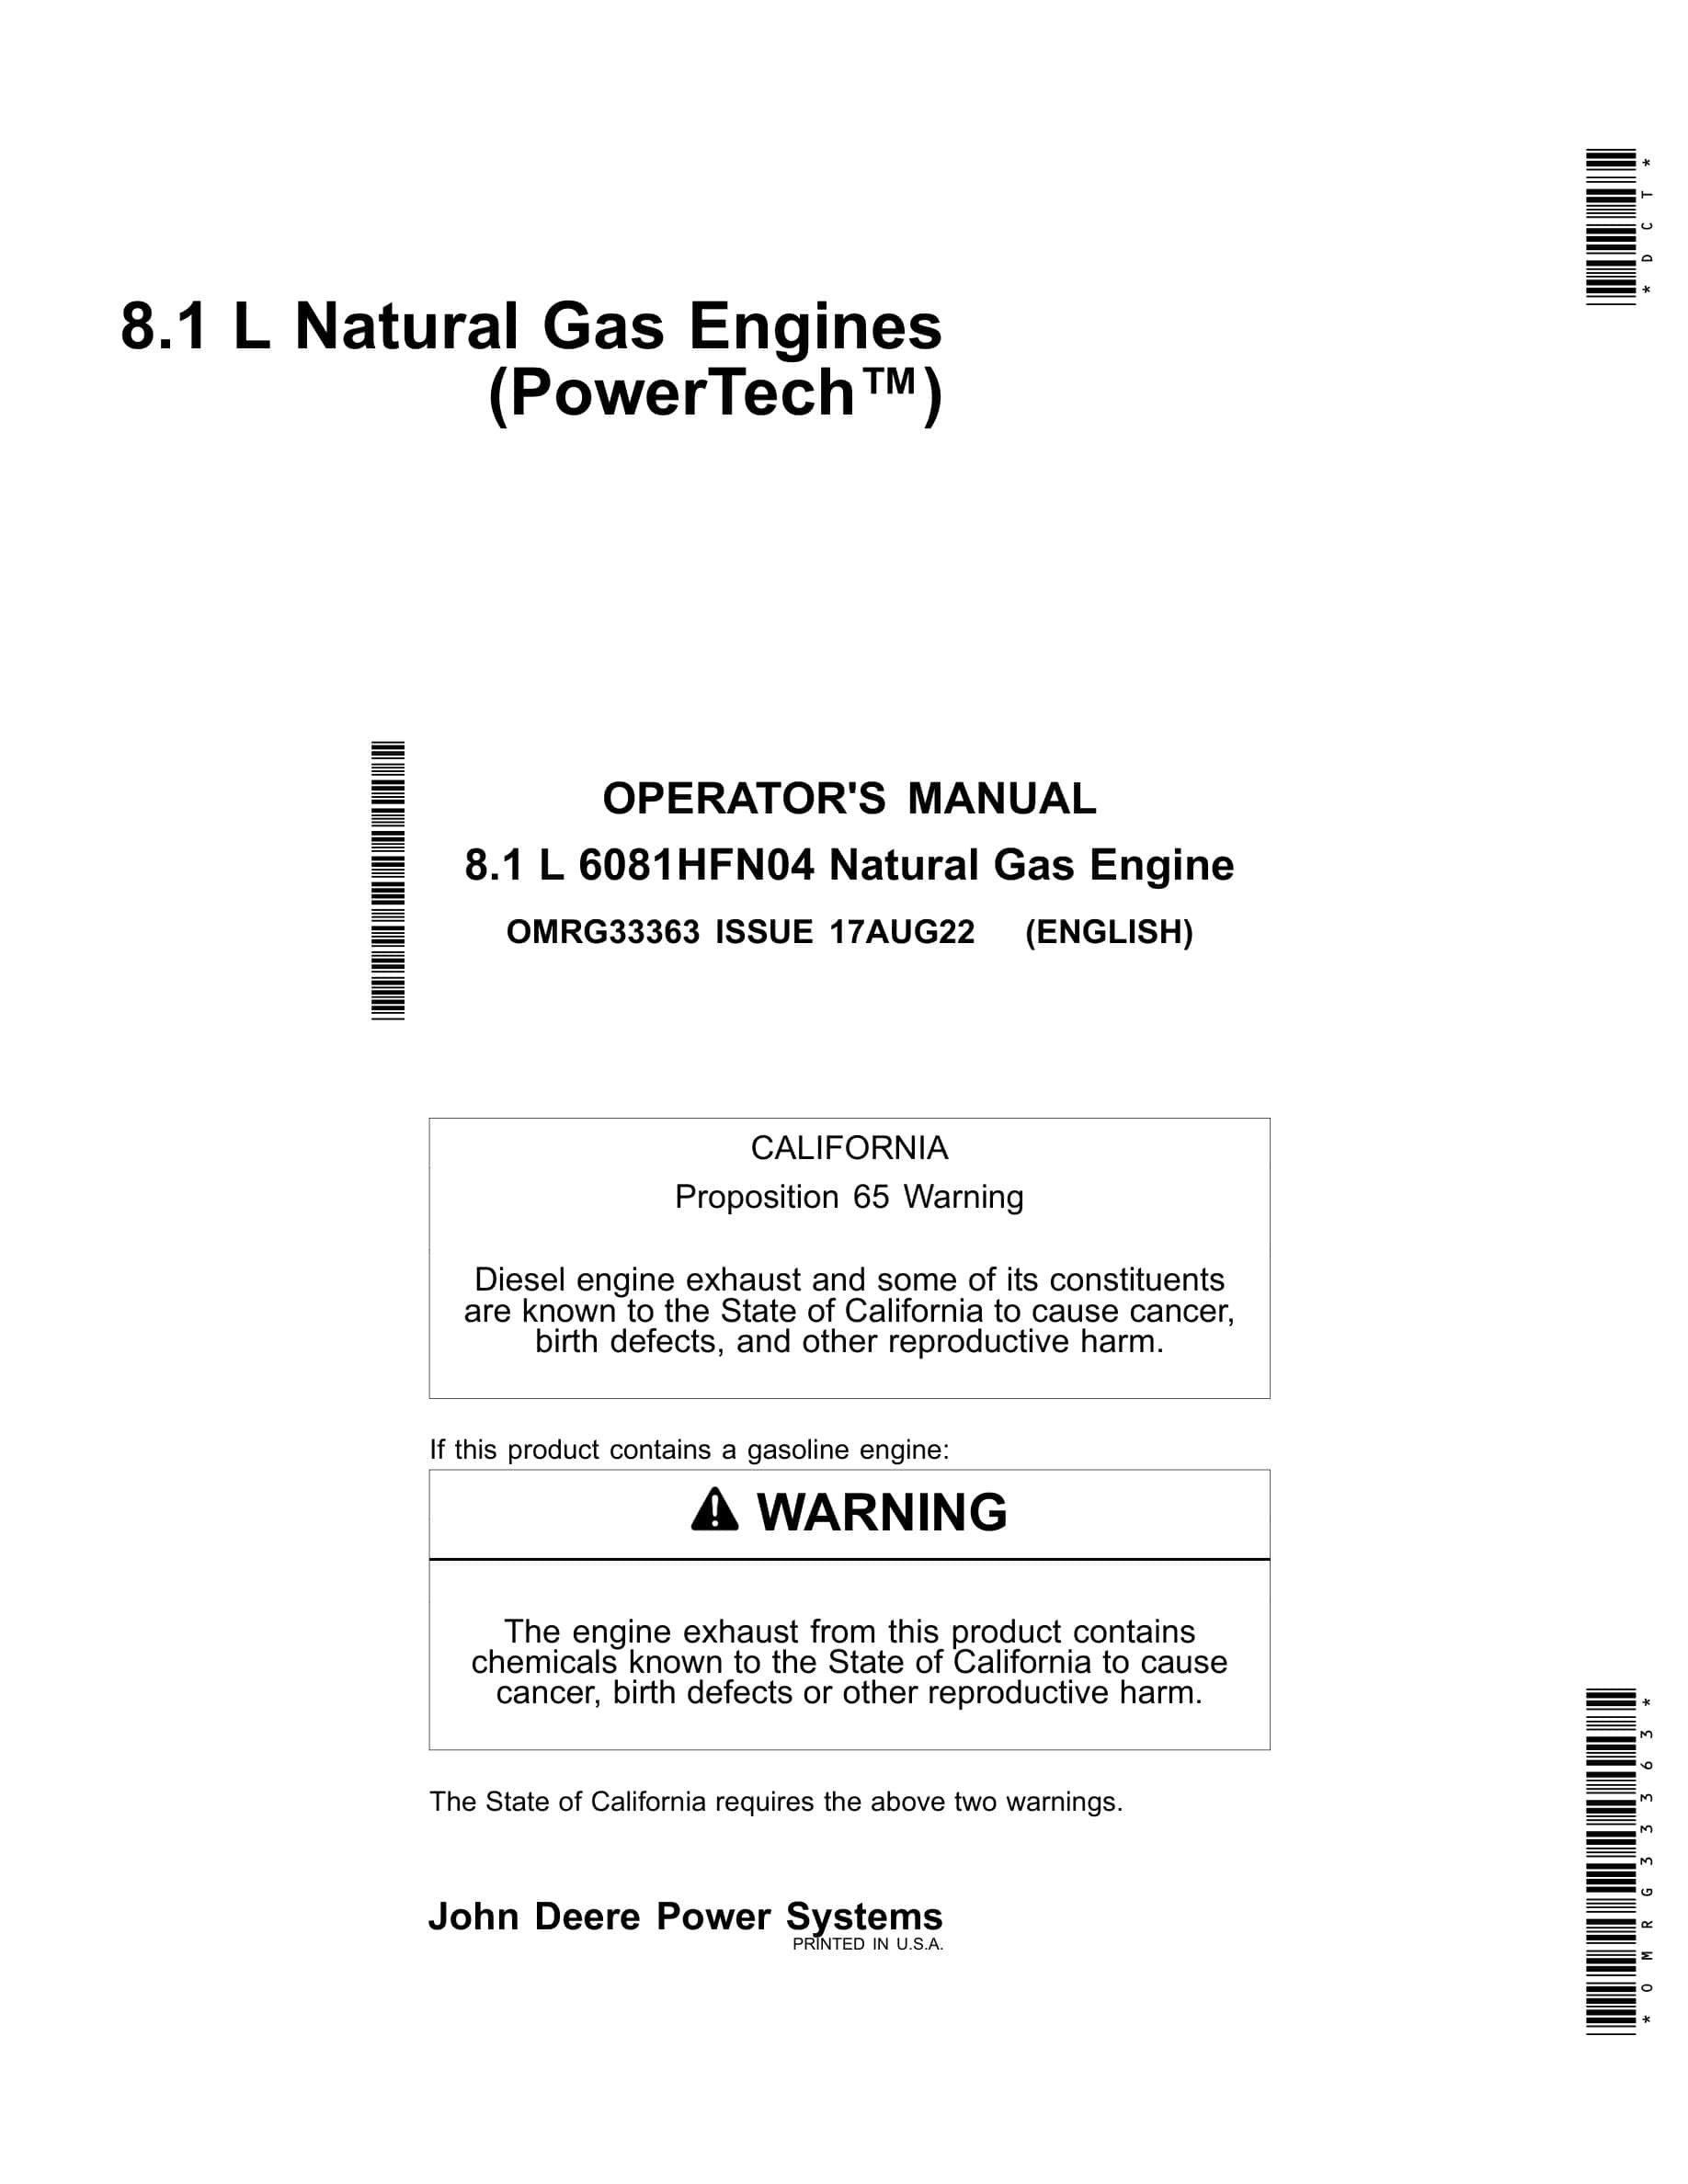 John Deere PowerTech 8.1 L 6081HFN04 Natural Gas Engine Operator Manual OMRG33363-1